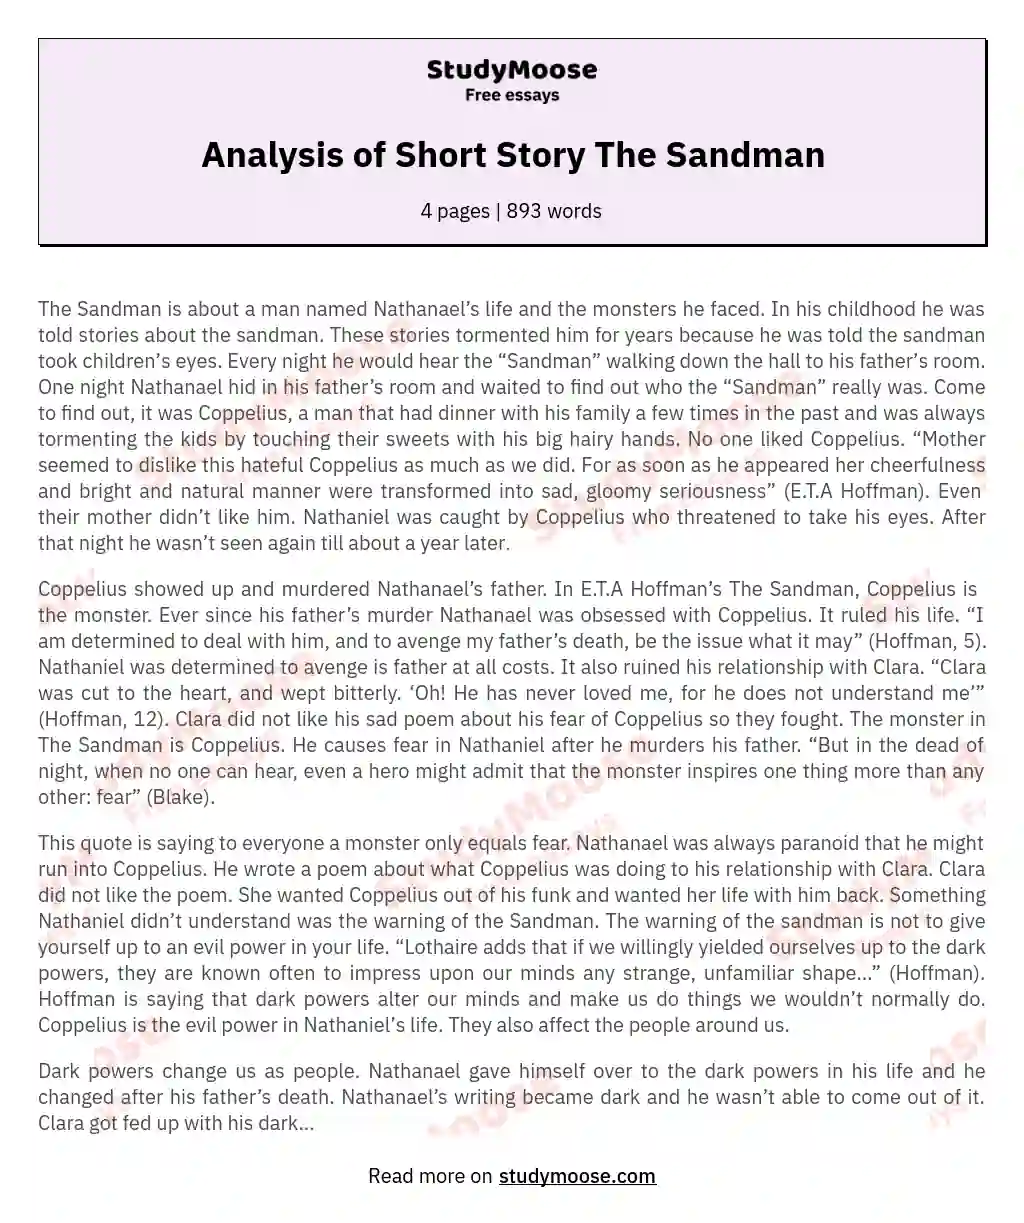 Analysis of Short Story The Sandman essay